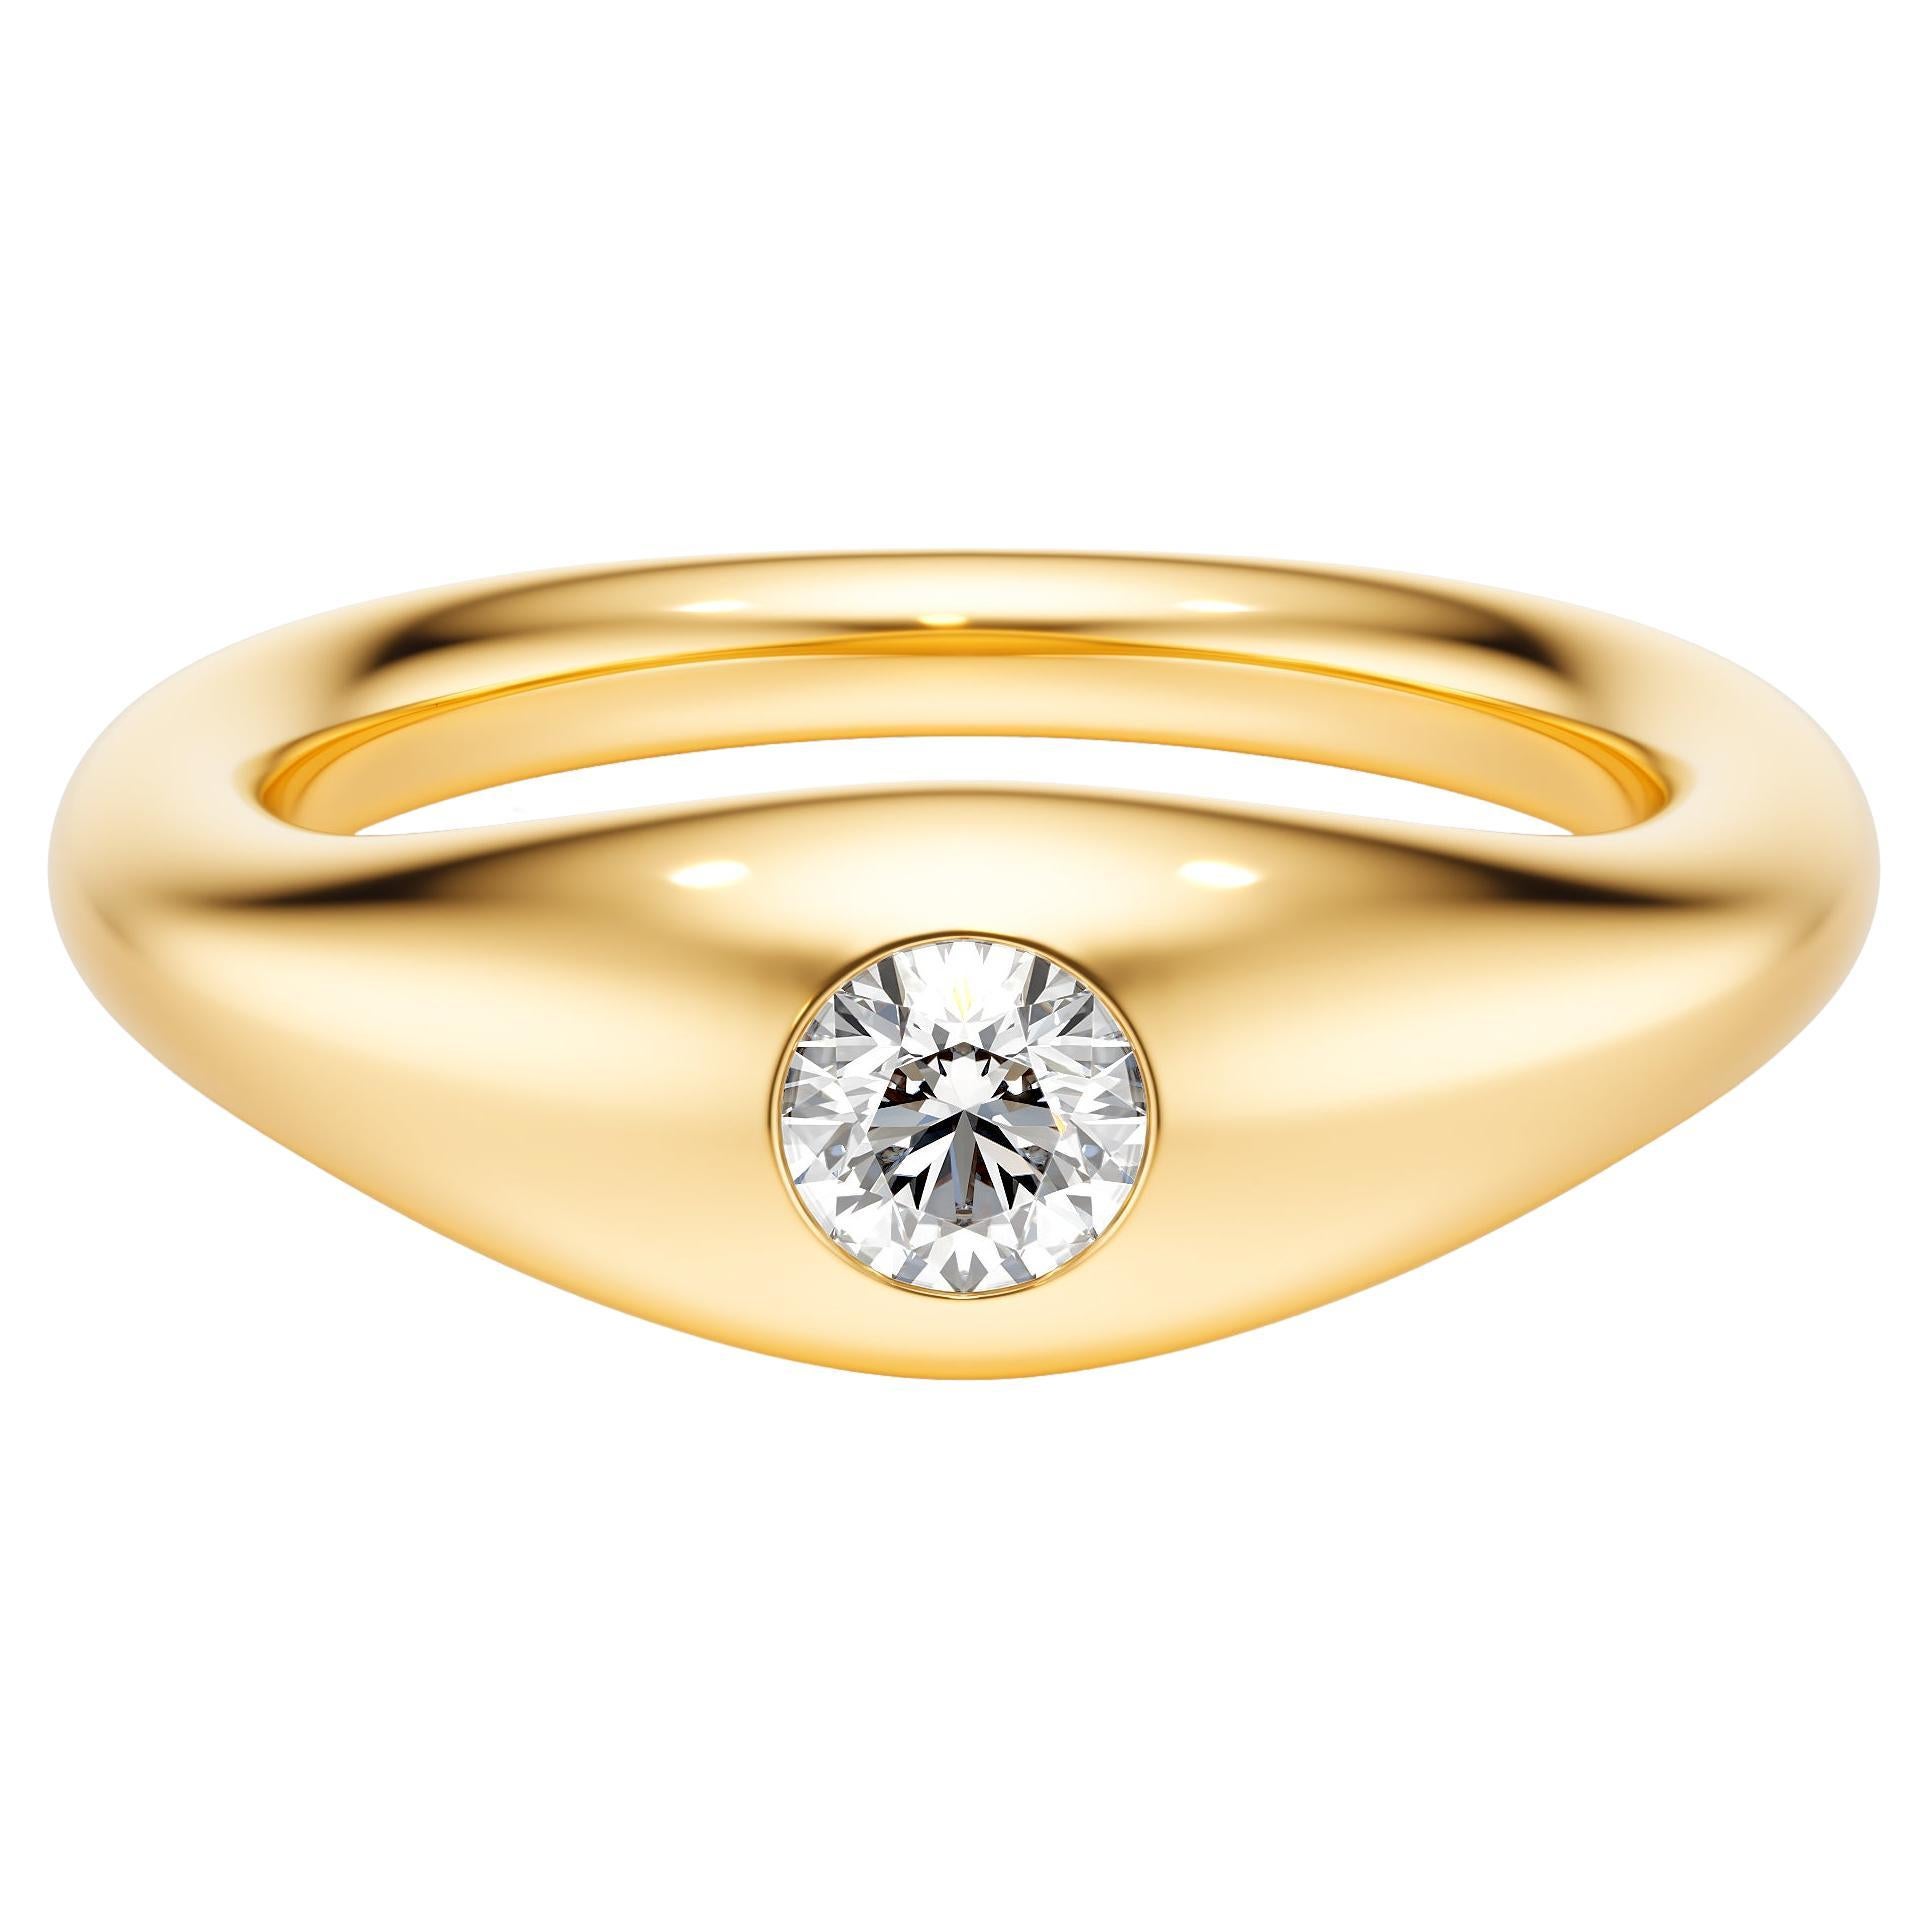 Ruth Nyc Lun Ring, 14k Yellow Gold and Diamond